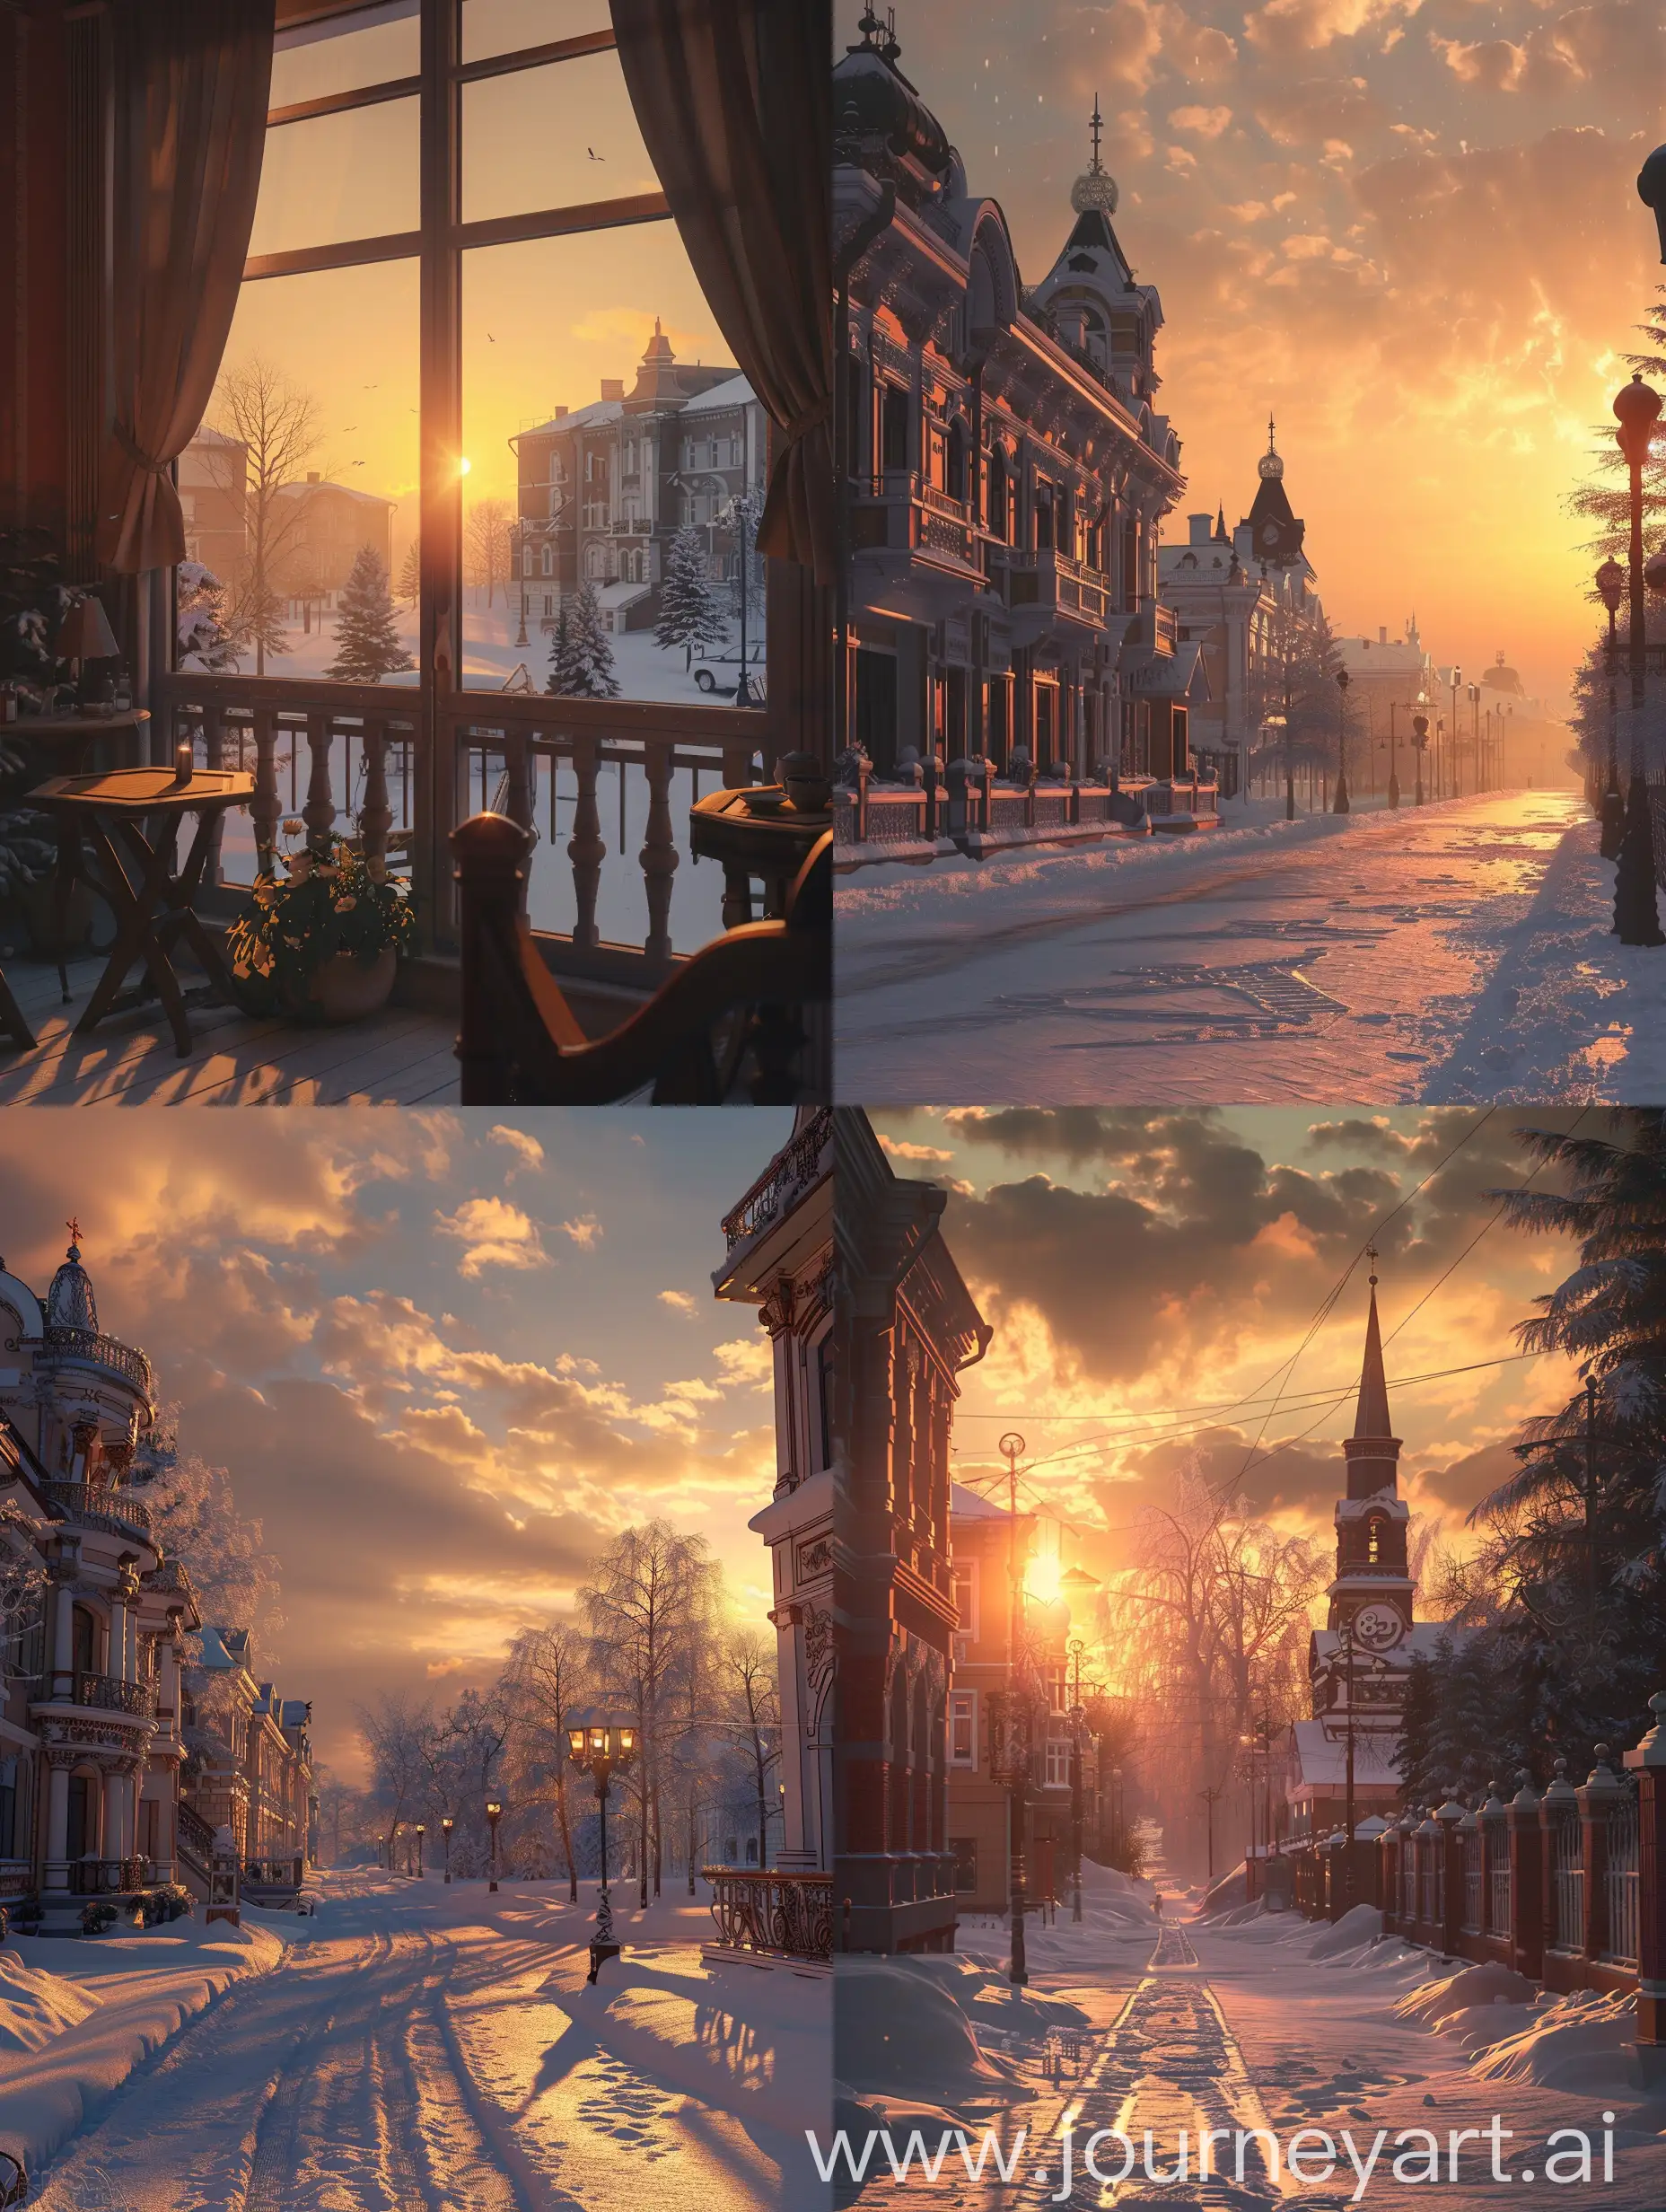 Sunset-in-Saransk-Exquisite-Winter-Haze-Scene-at-5Star-Hotel